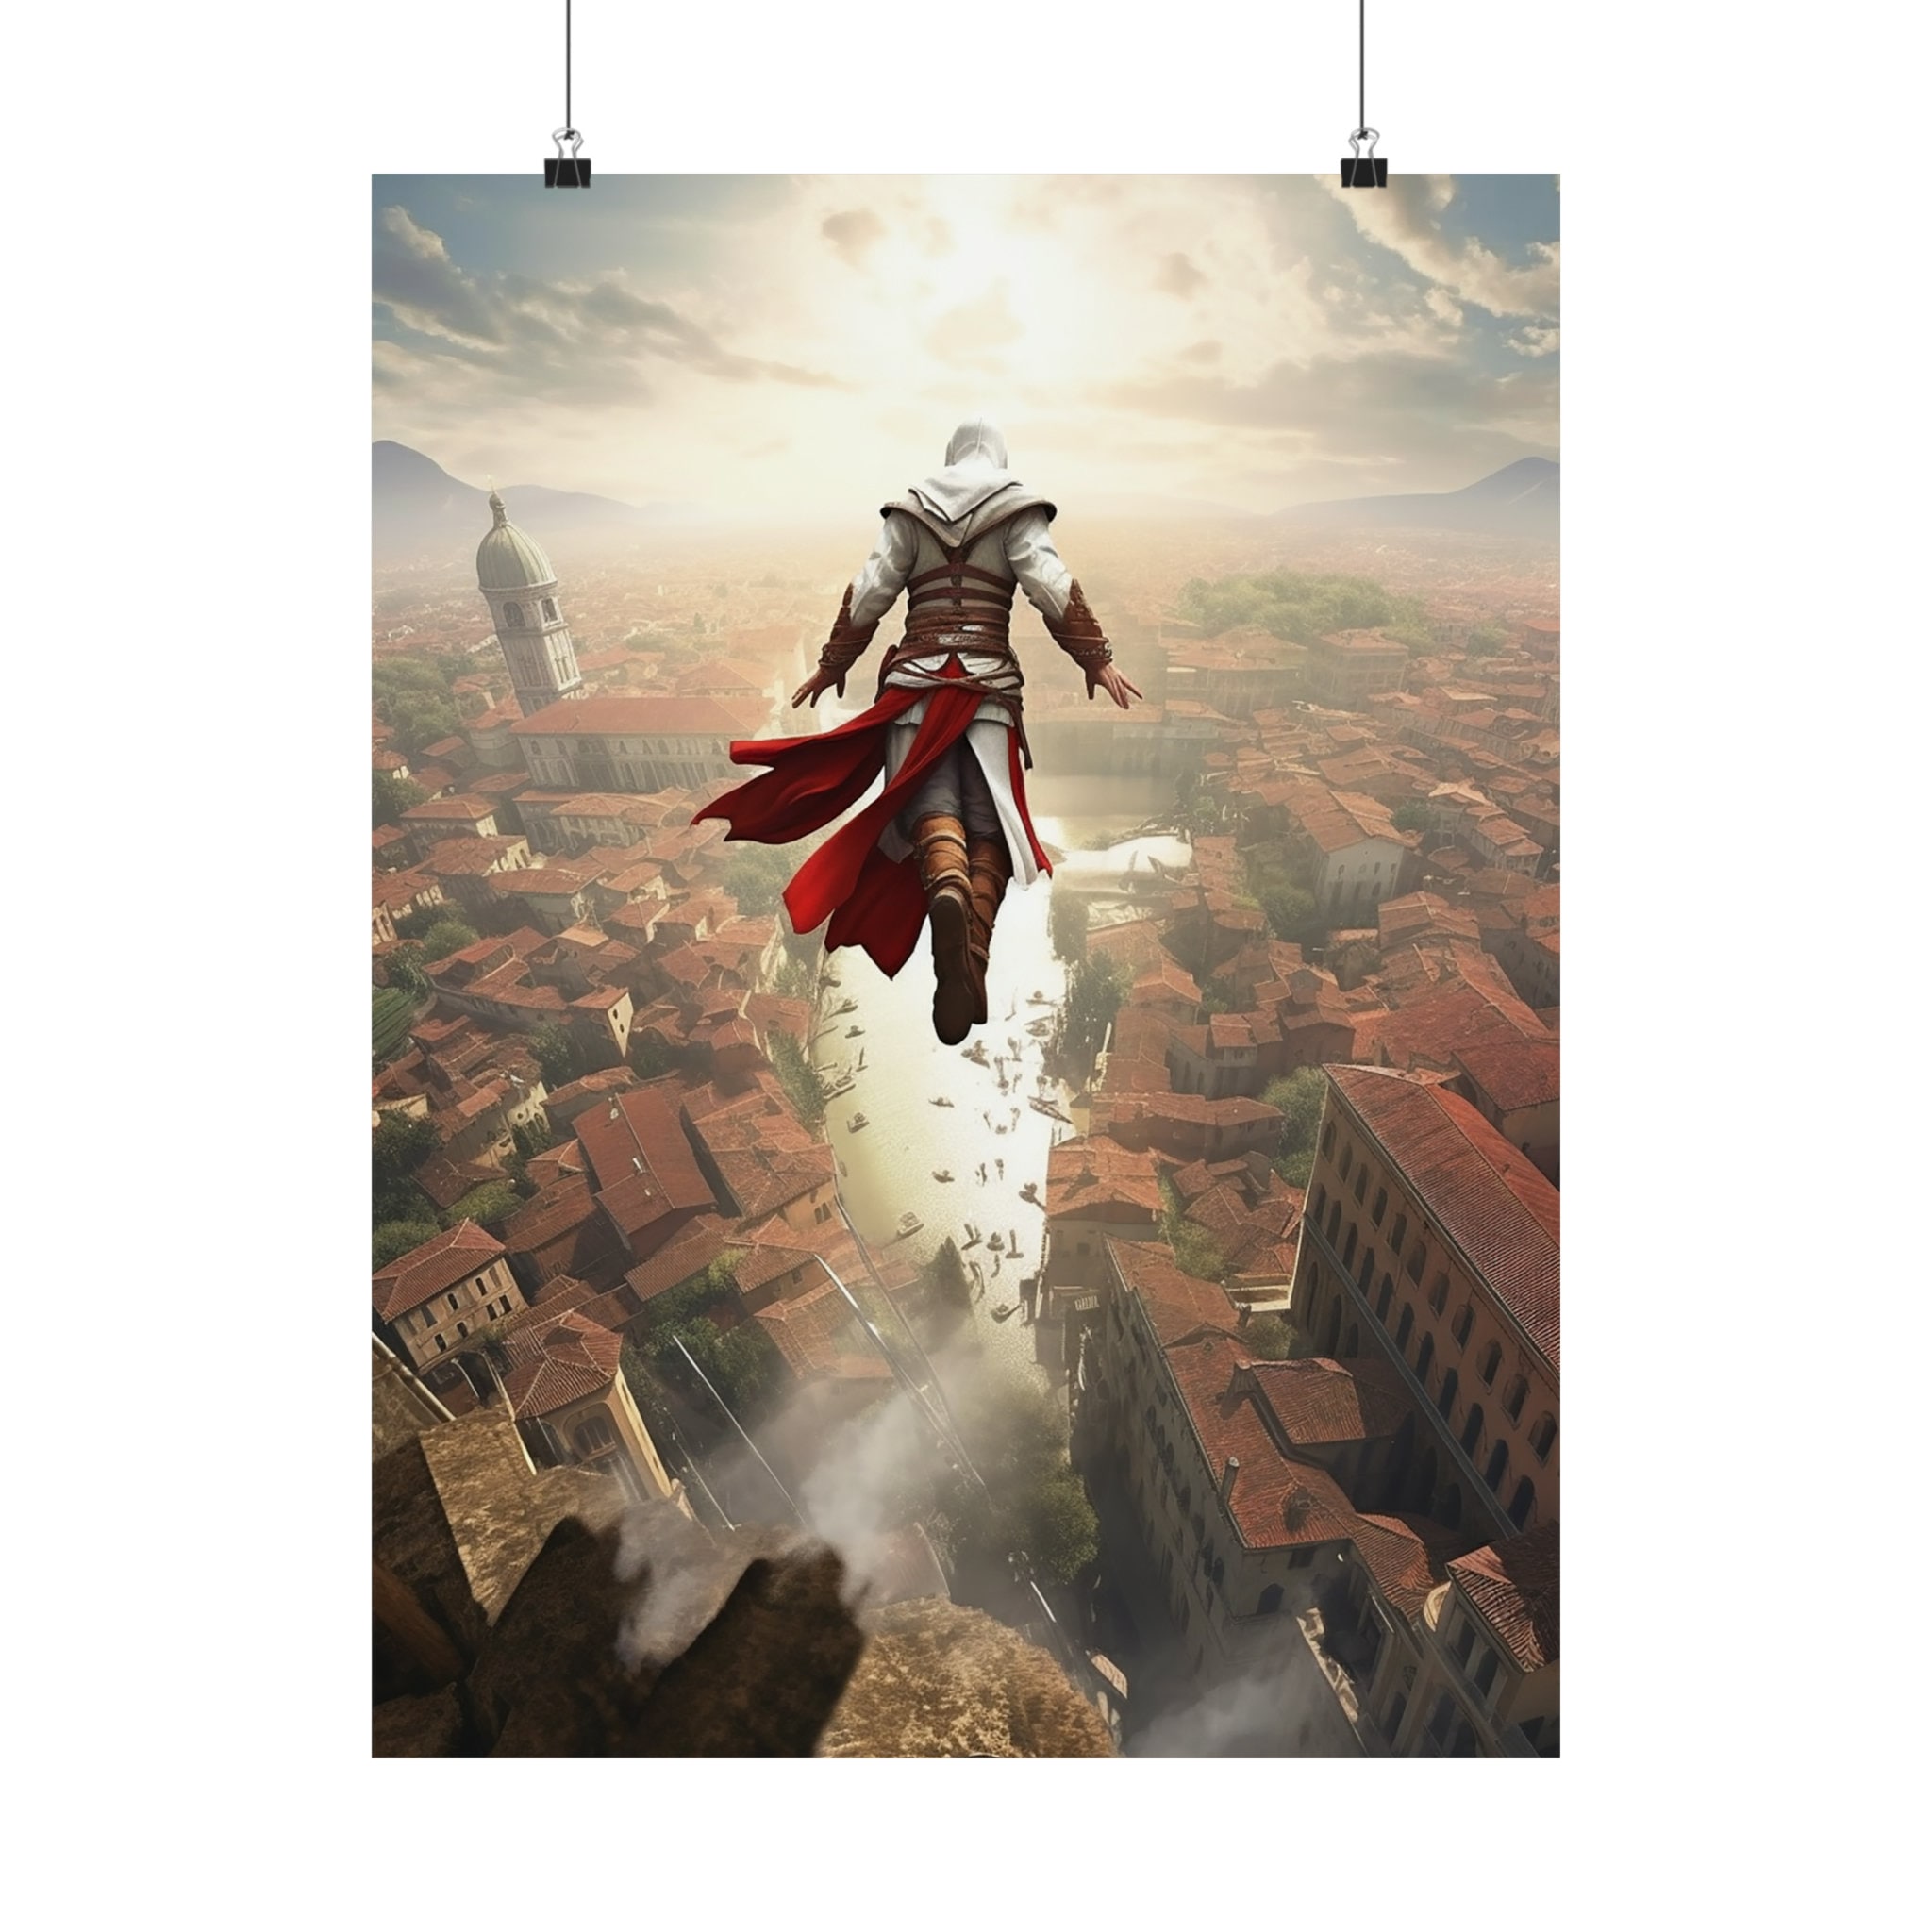 Assassin's Creed 2 - Ezio's Trilogy Alternative Poster, Koke, PosterSpy